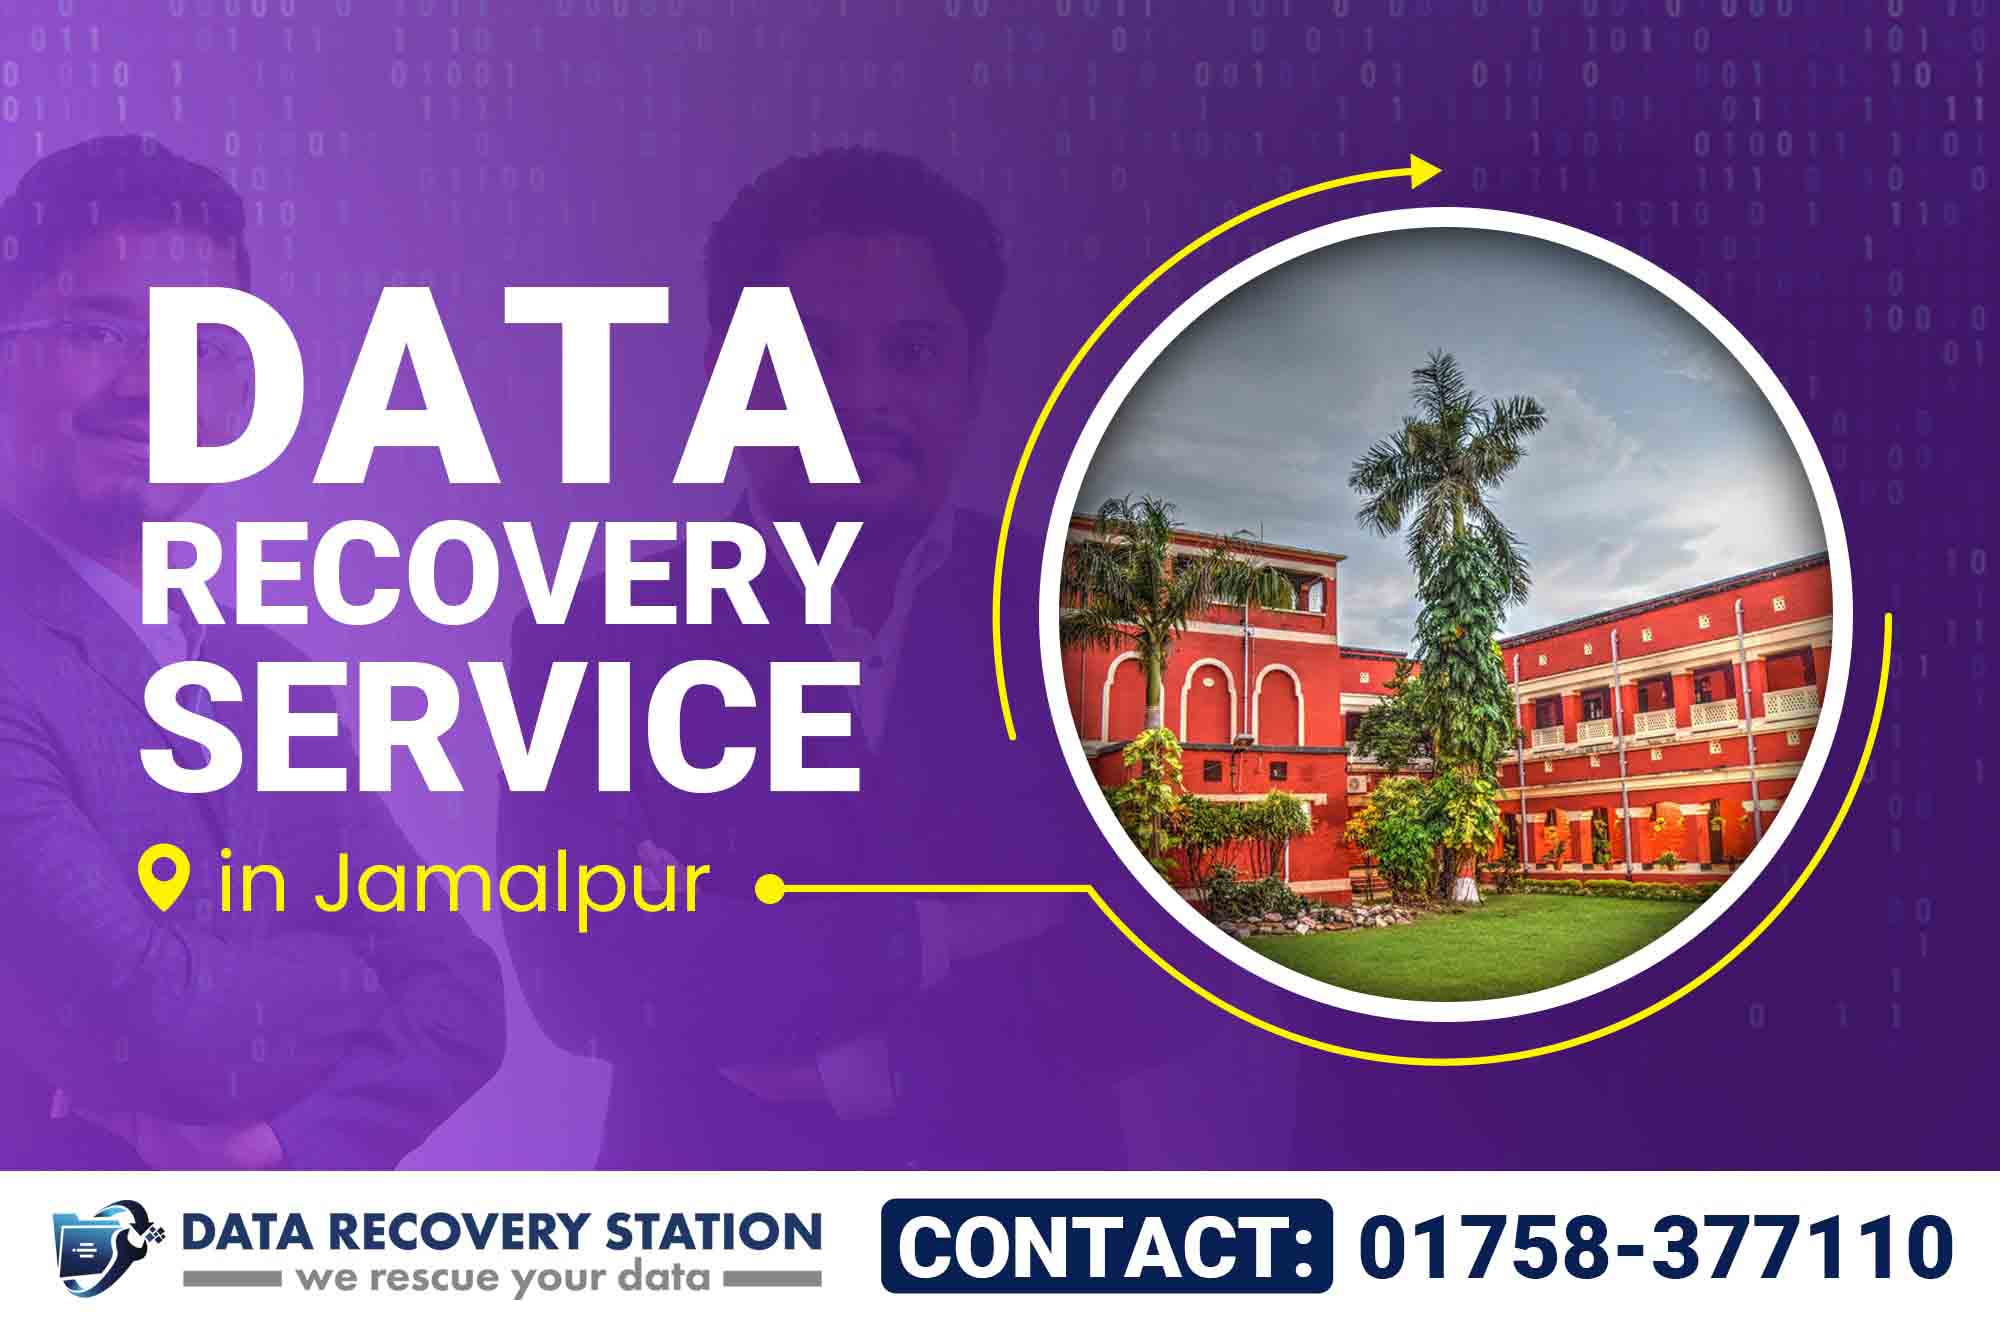 Data Recovery Service in Jamalpur